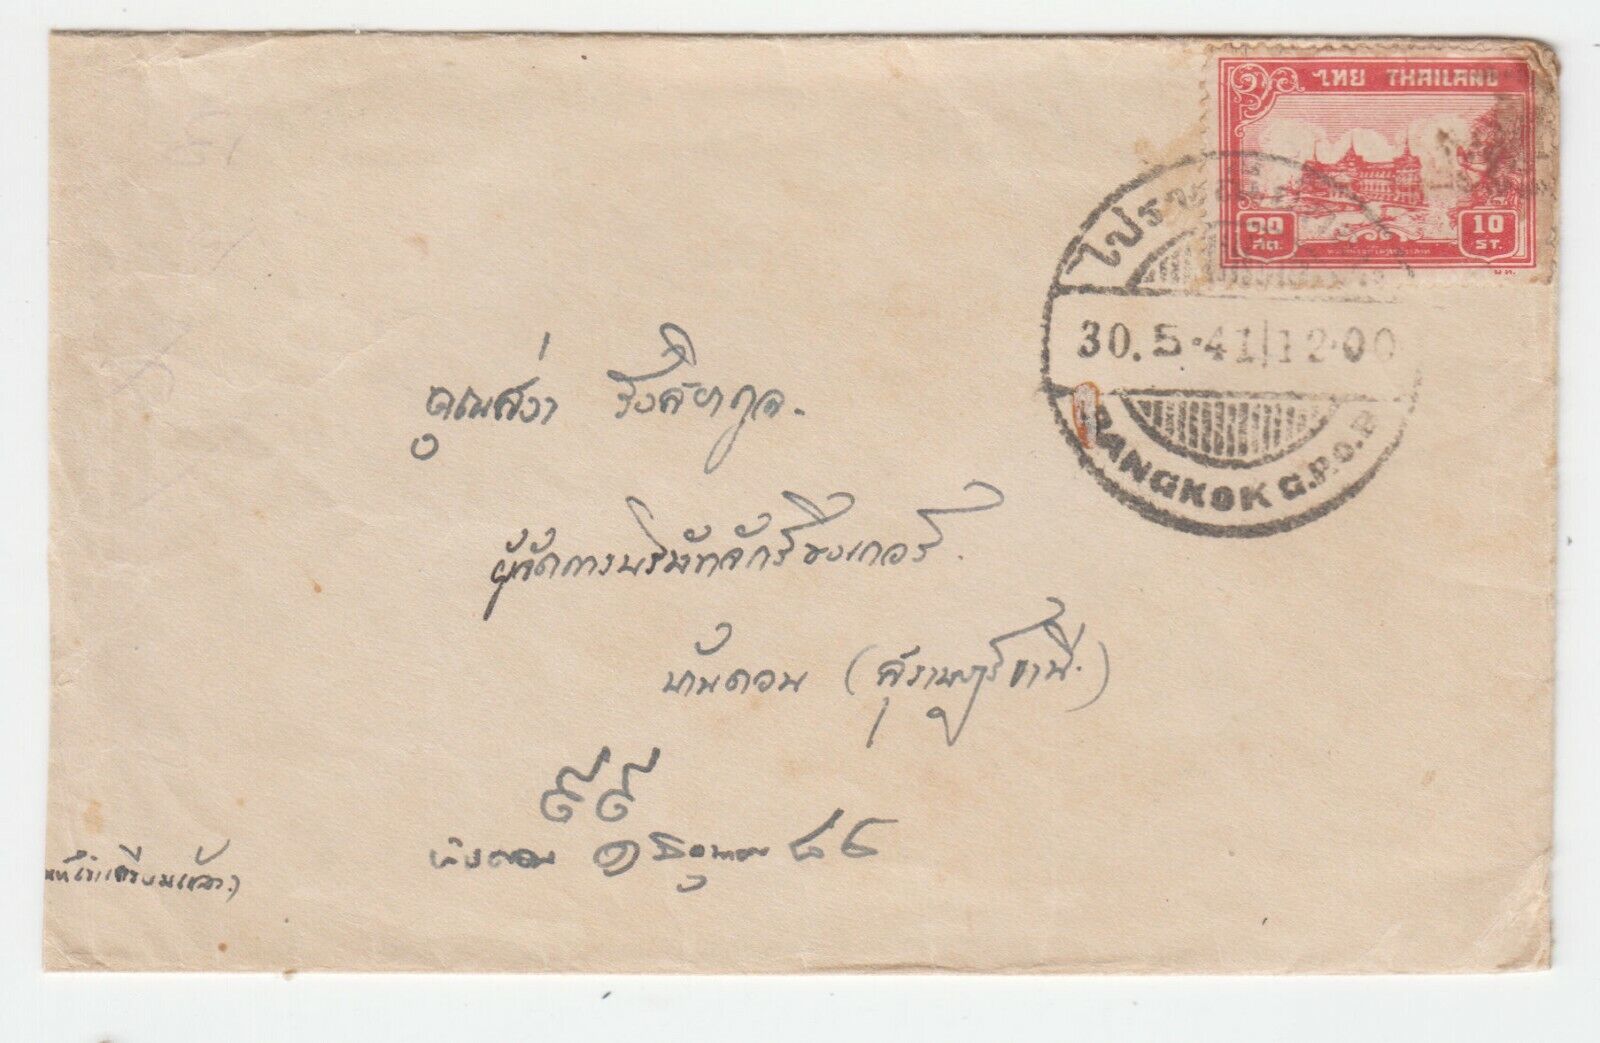 THAILAND. 1941 10 stg Chakri on Bangkok cover